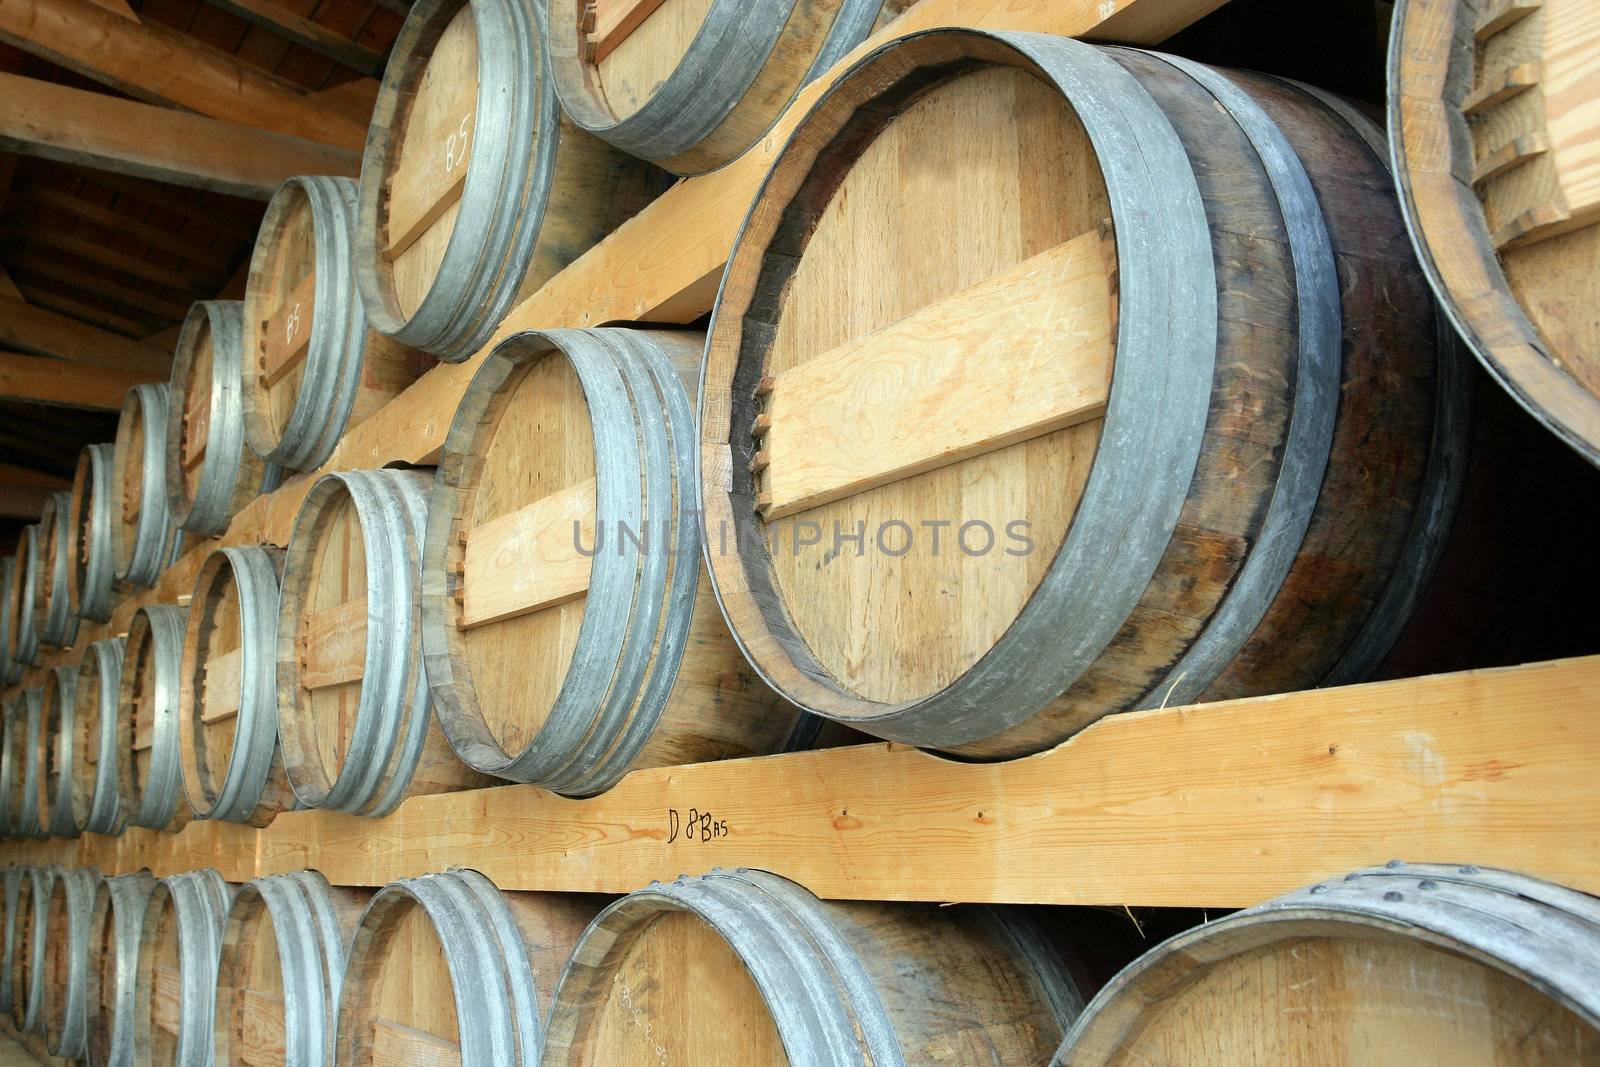 Barrels stored in a cellar